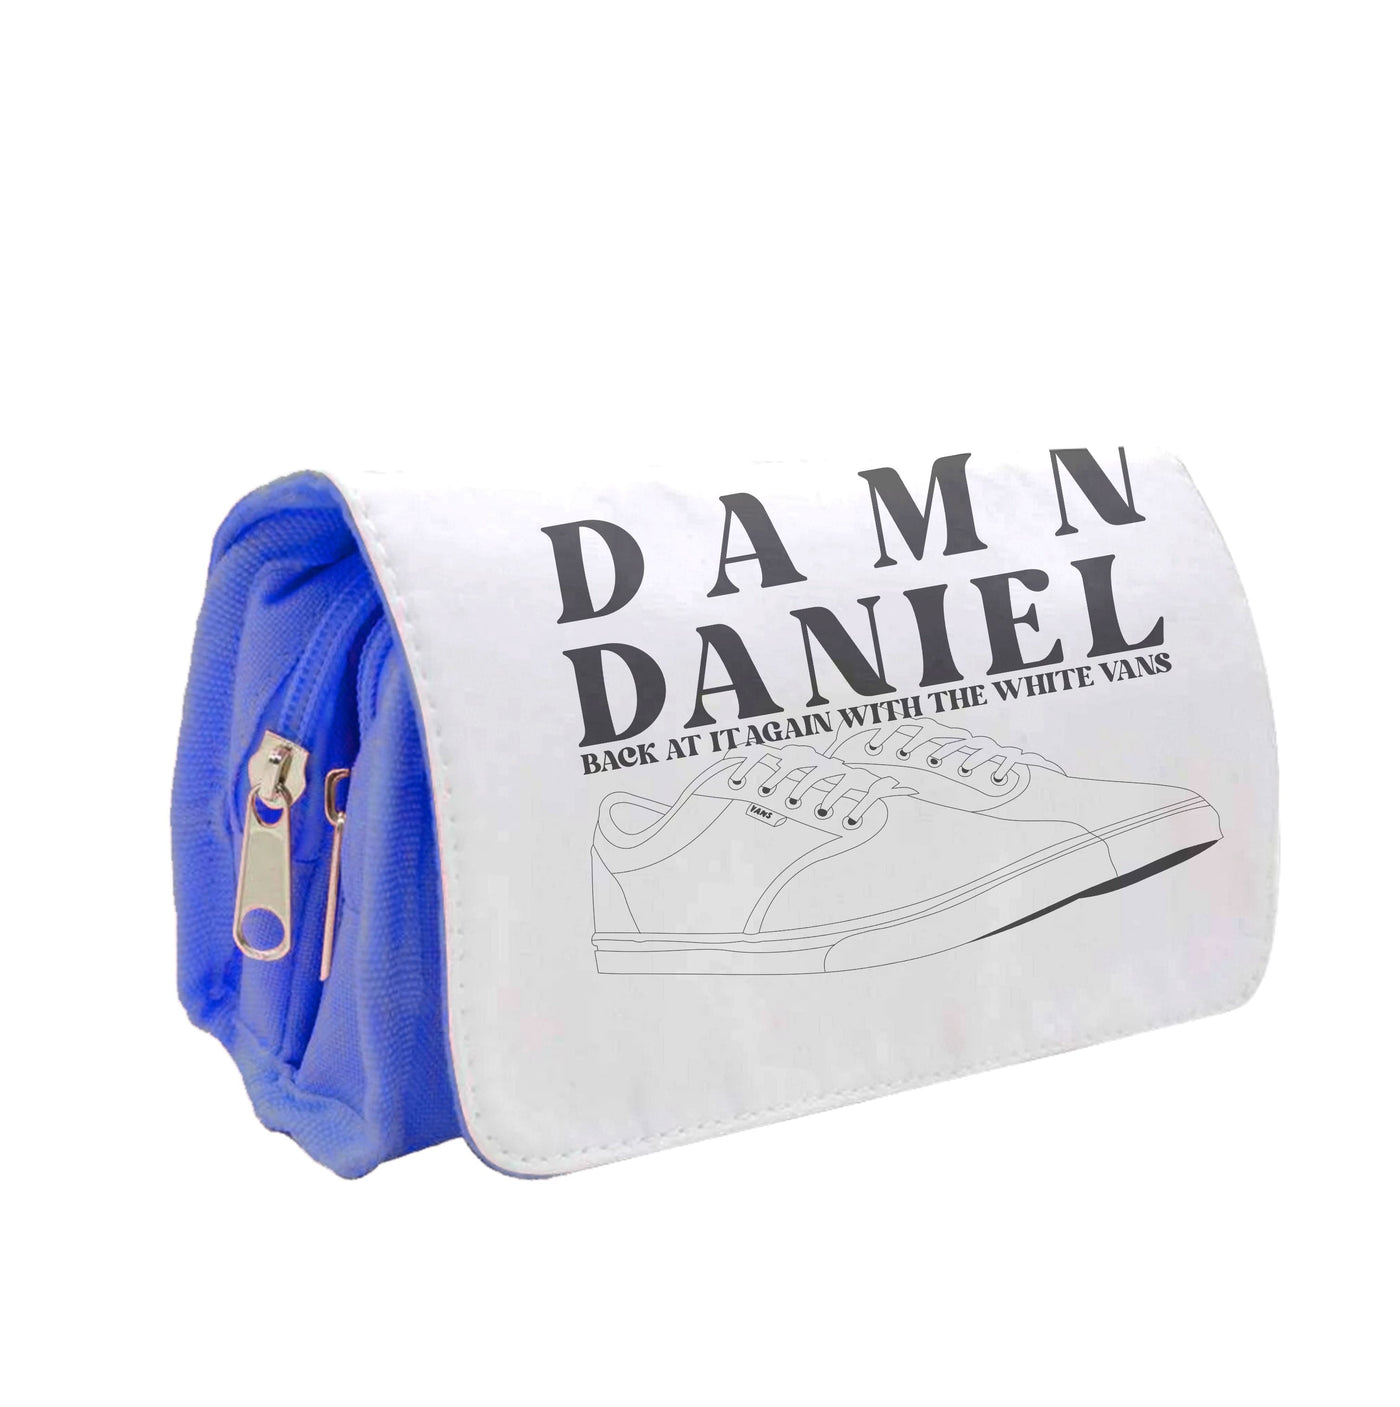 Damn Daniel - Memes Pencil Case